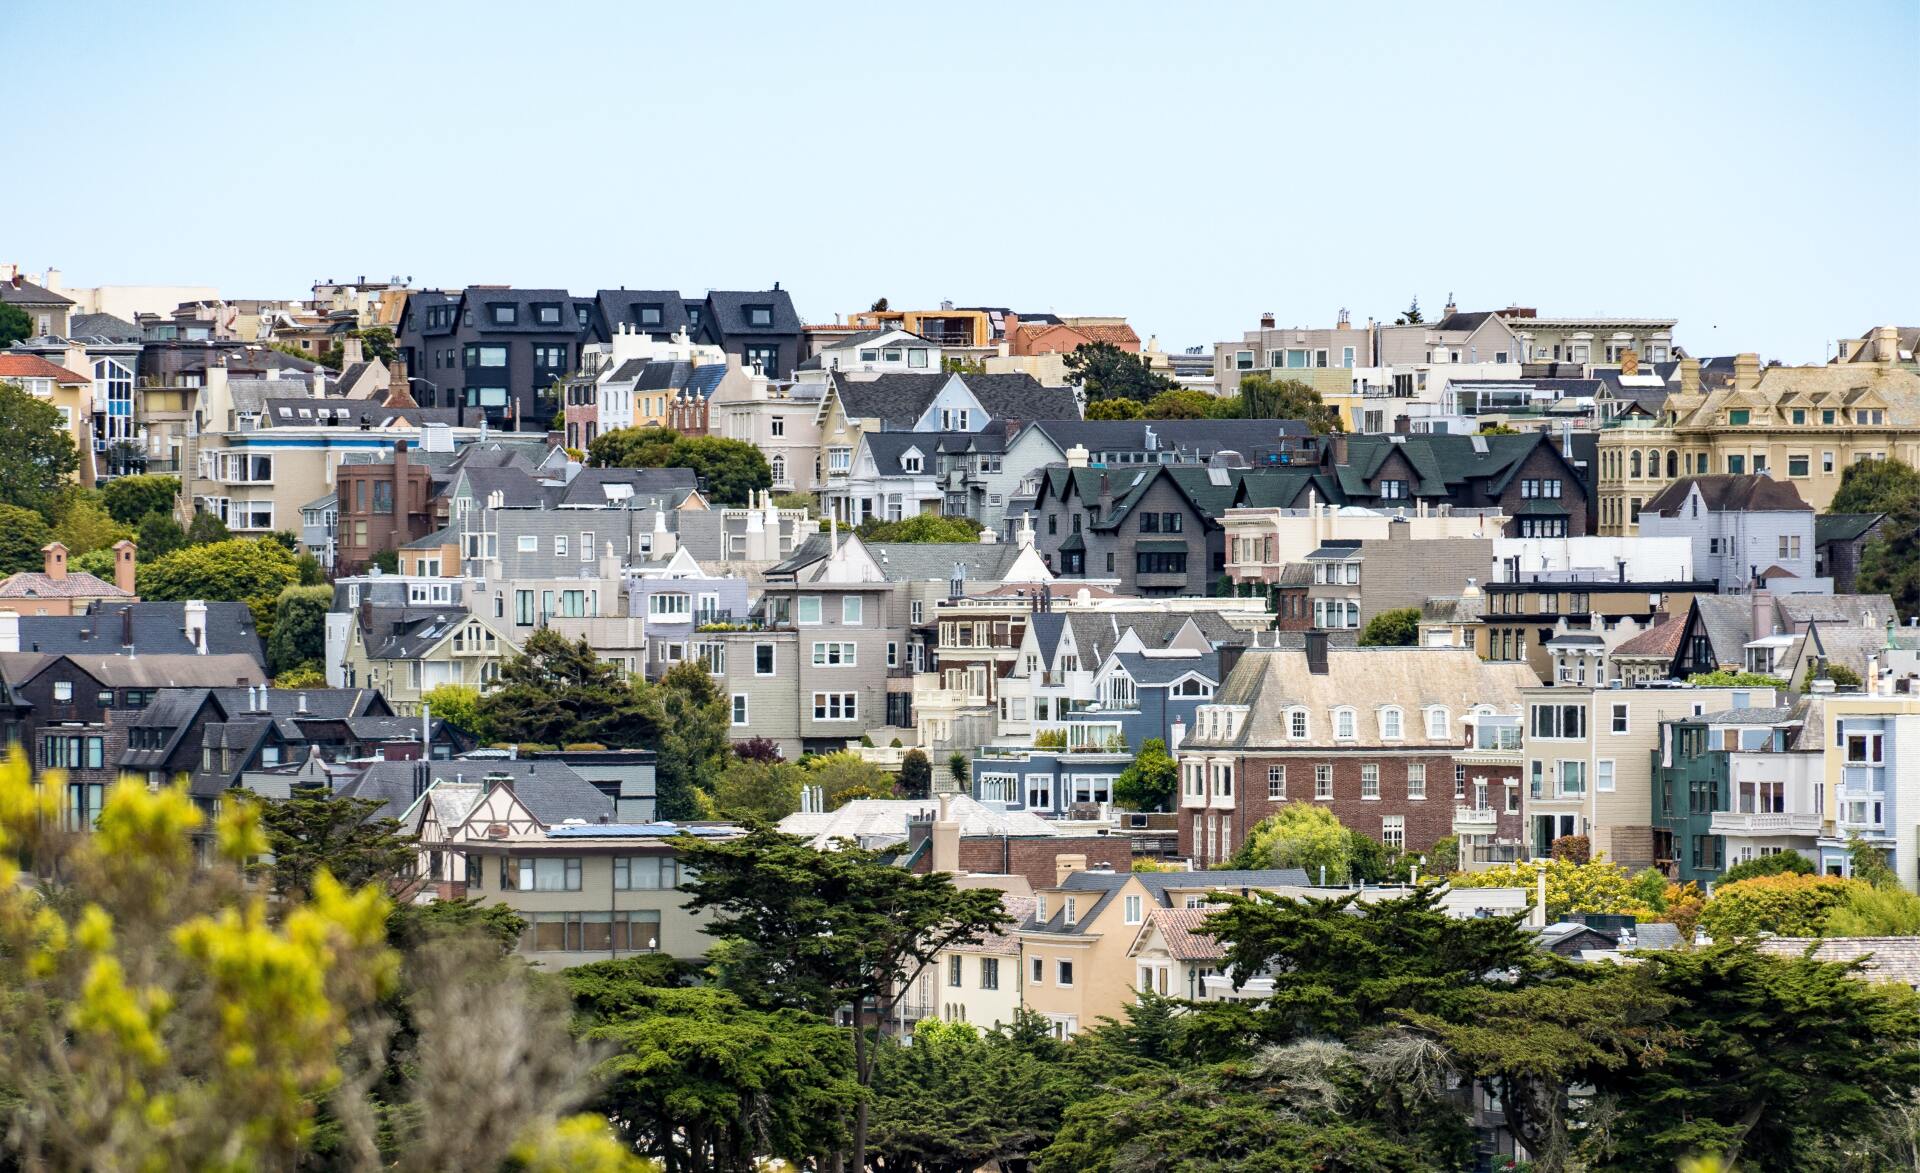 San Francisco residential neighborhood